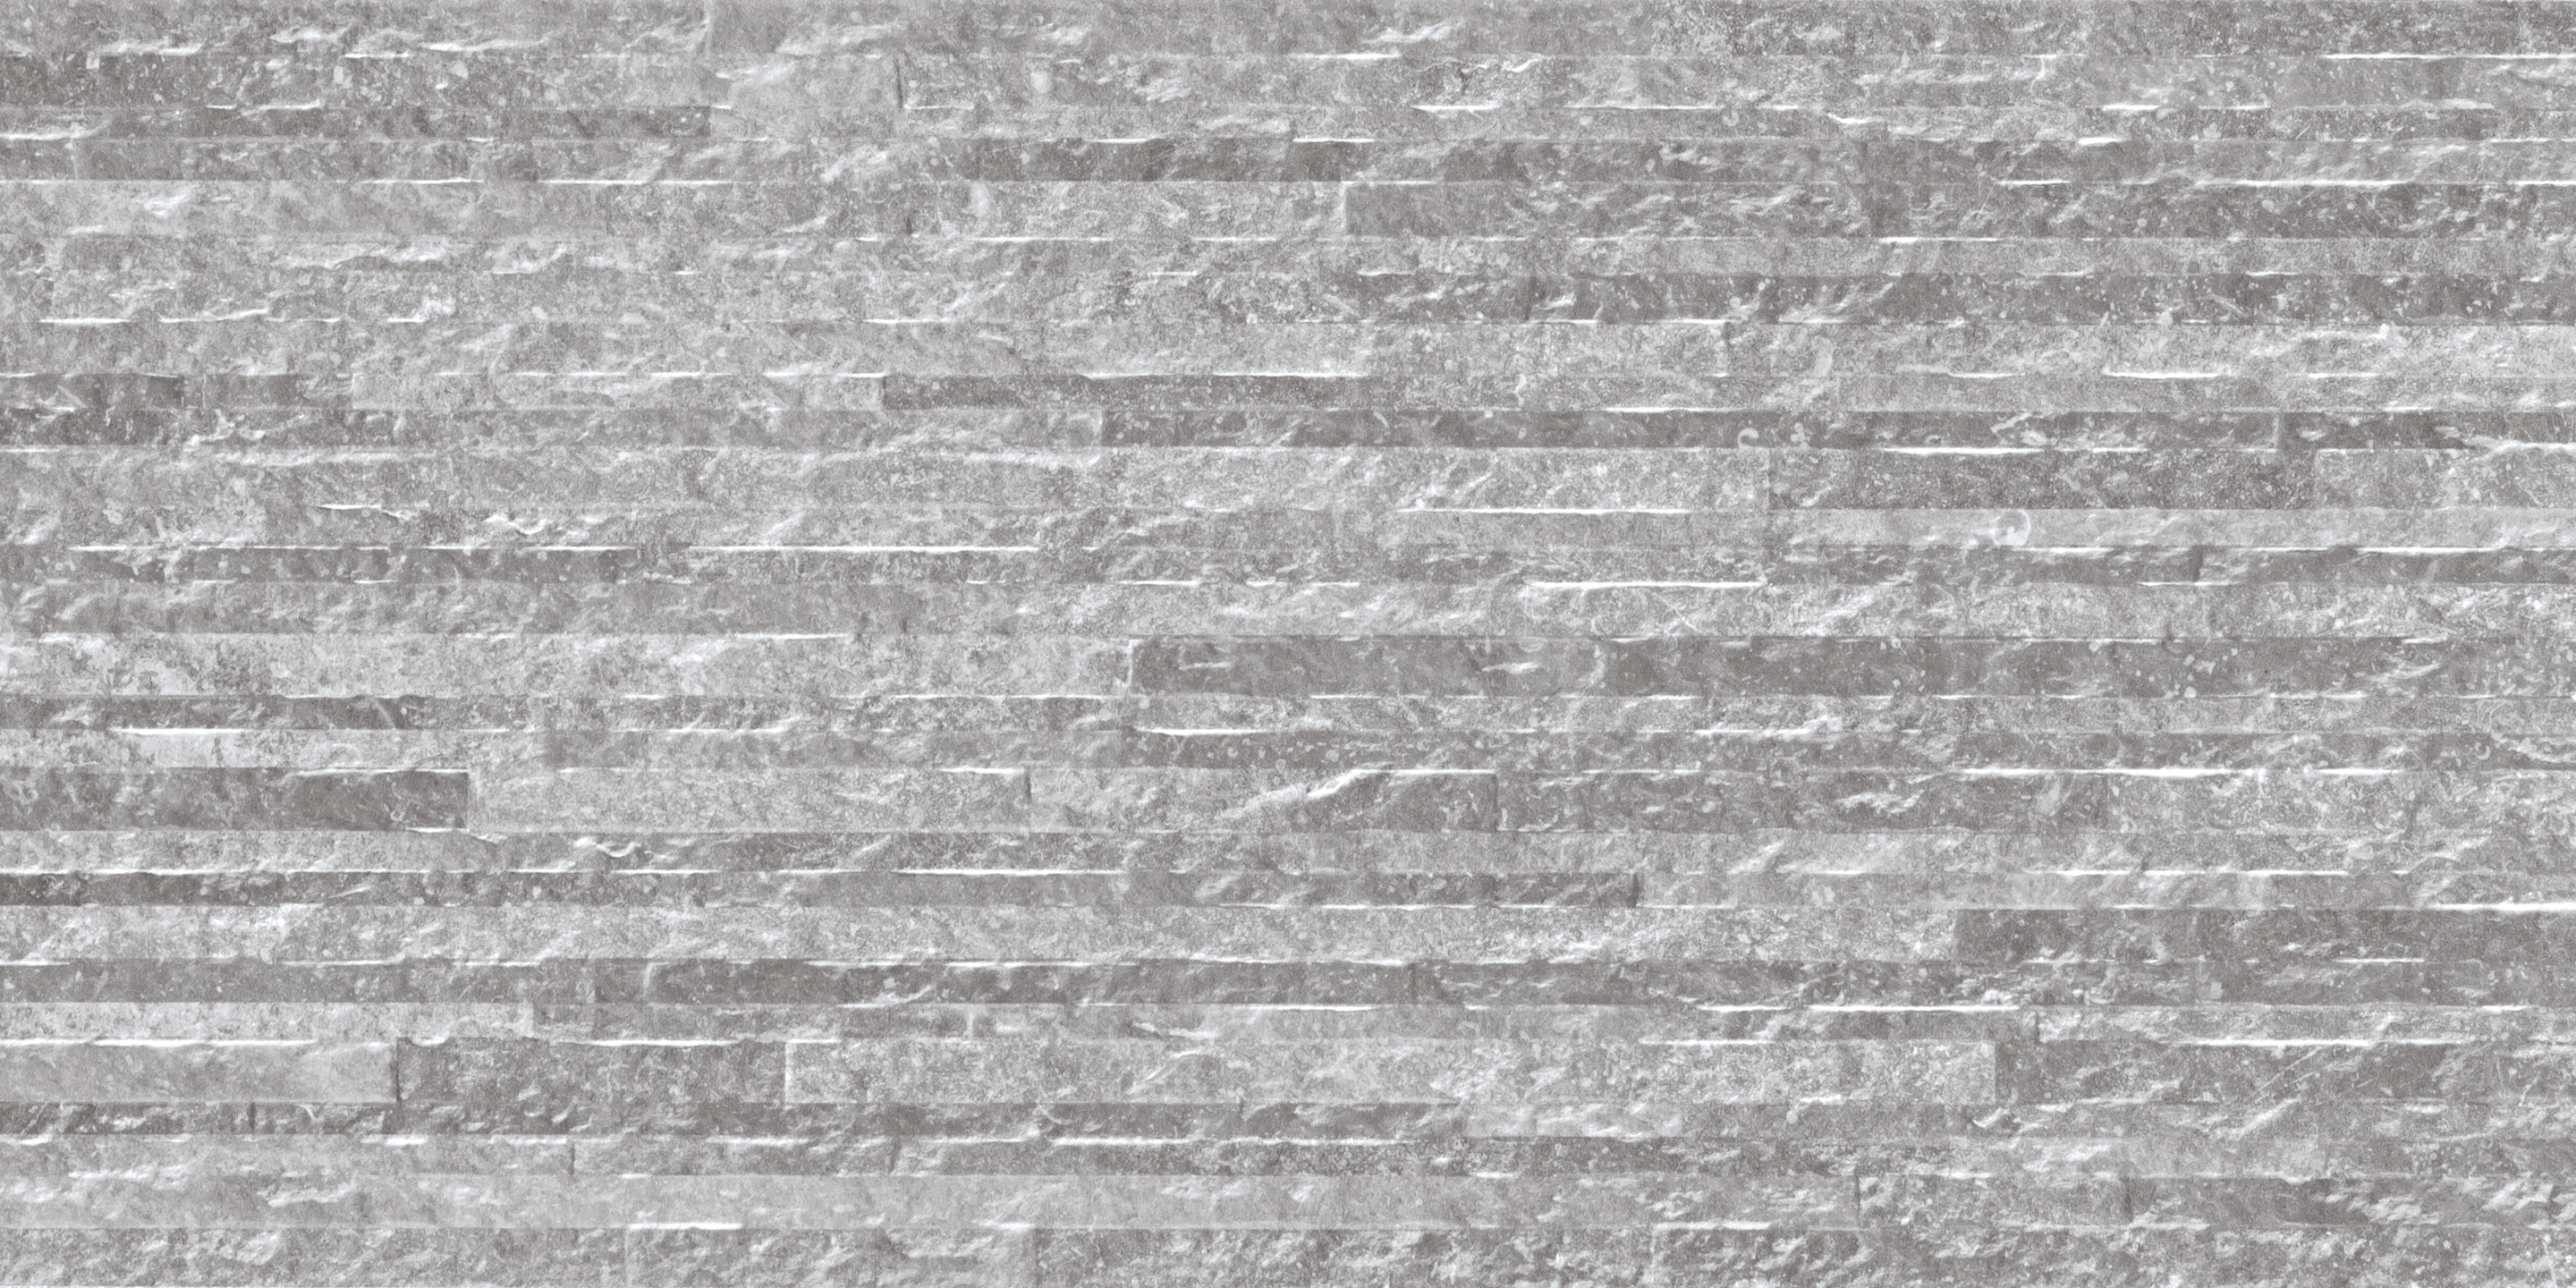 12 x 24 Marwari Rain relief deco rectified porcelain tile (SPECIAL ORDER)